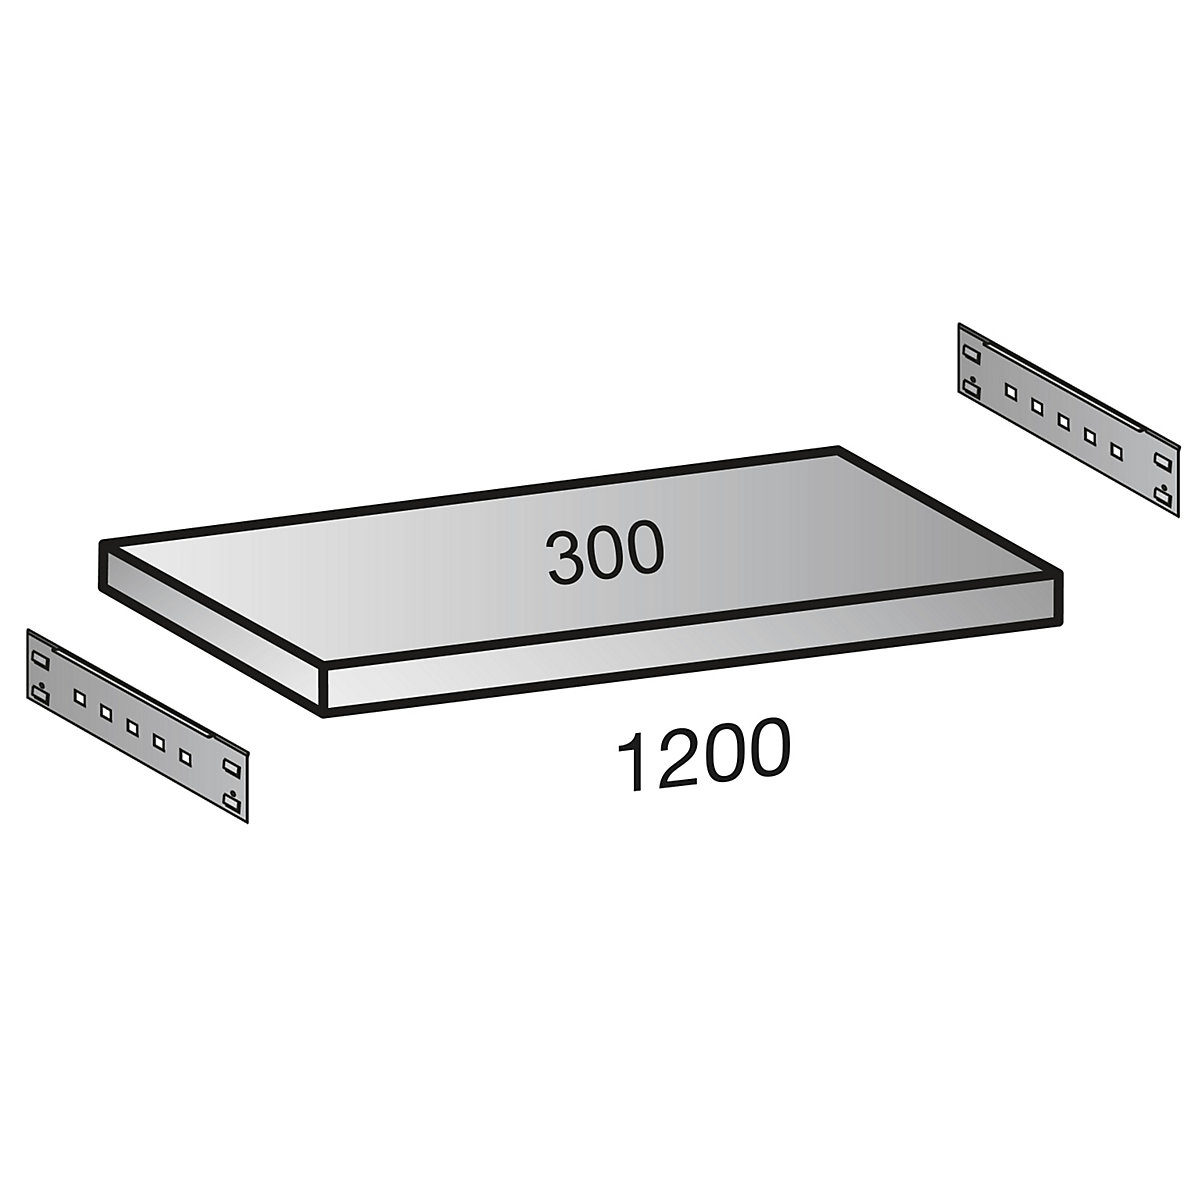 Shelf for industrial boltless shelf unit, shelf width 1200 mm, depth 300 mm